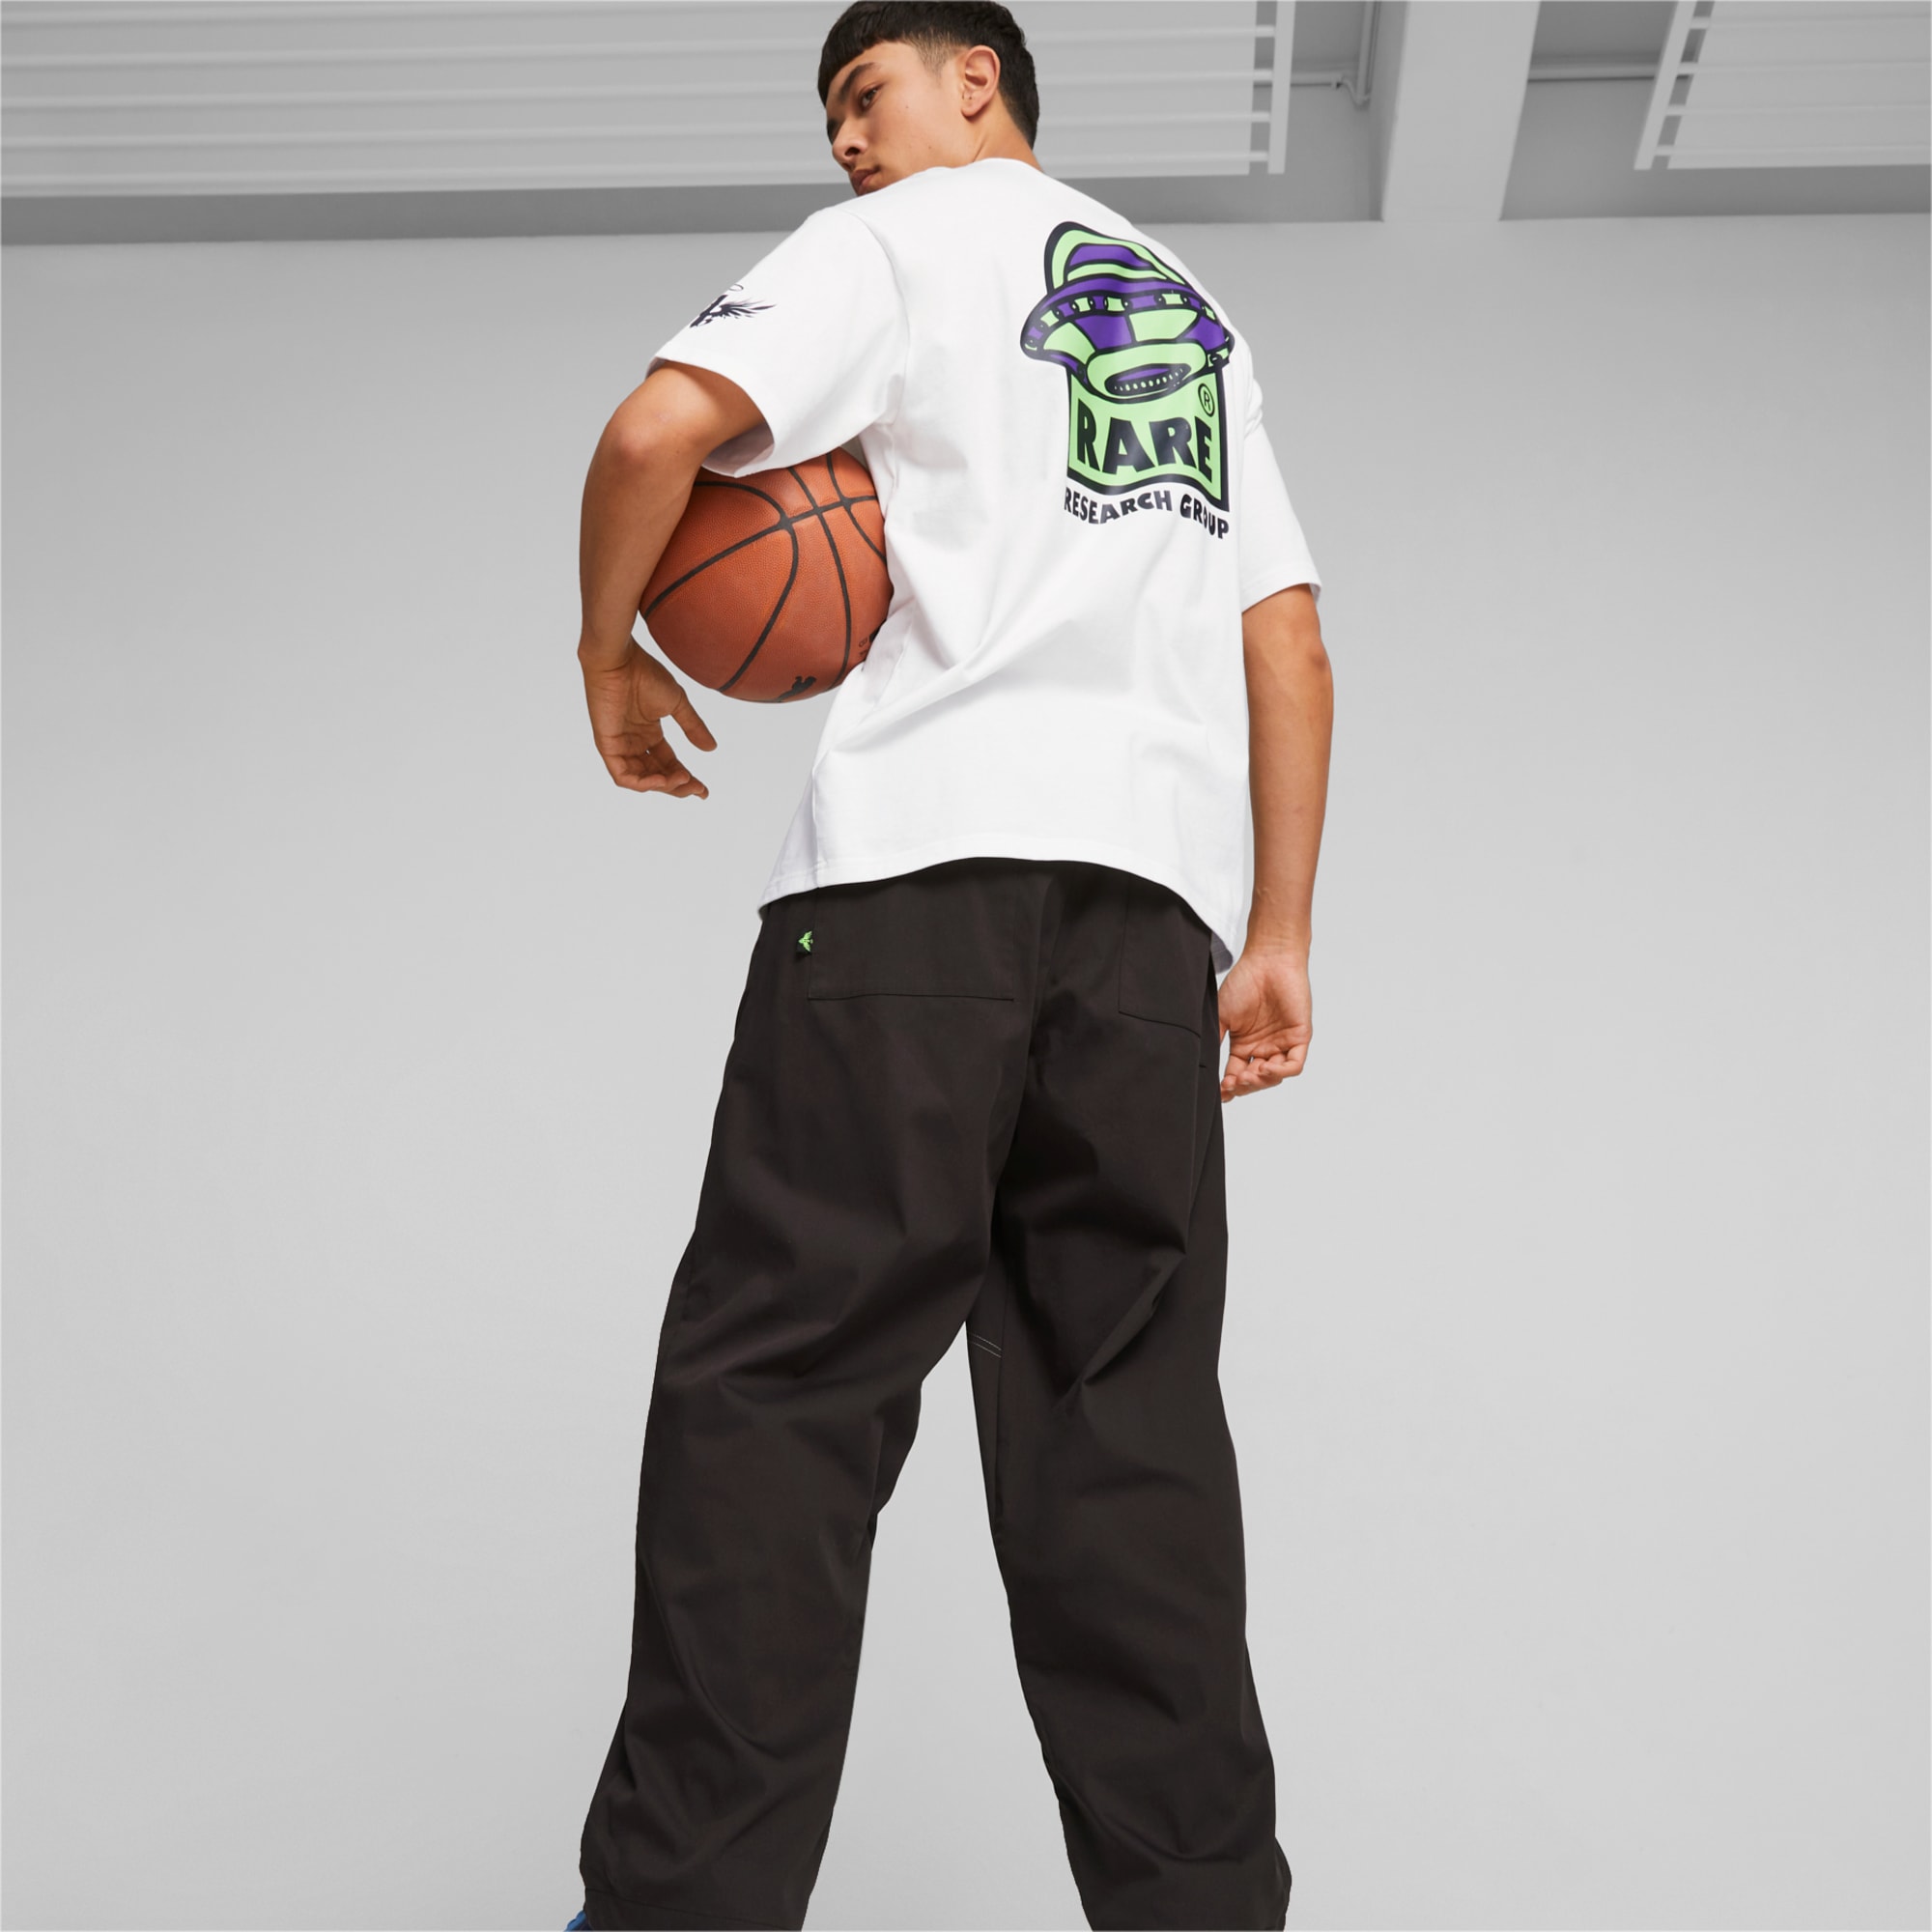 PUMA Melo X Toxic Men's Basketball Dime Pants, Black, Size L, Clothing